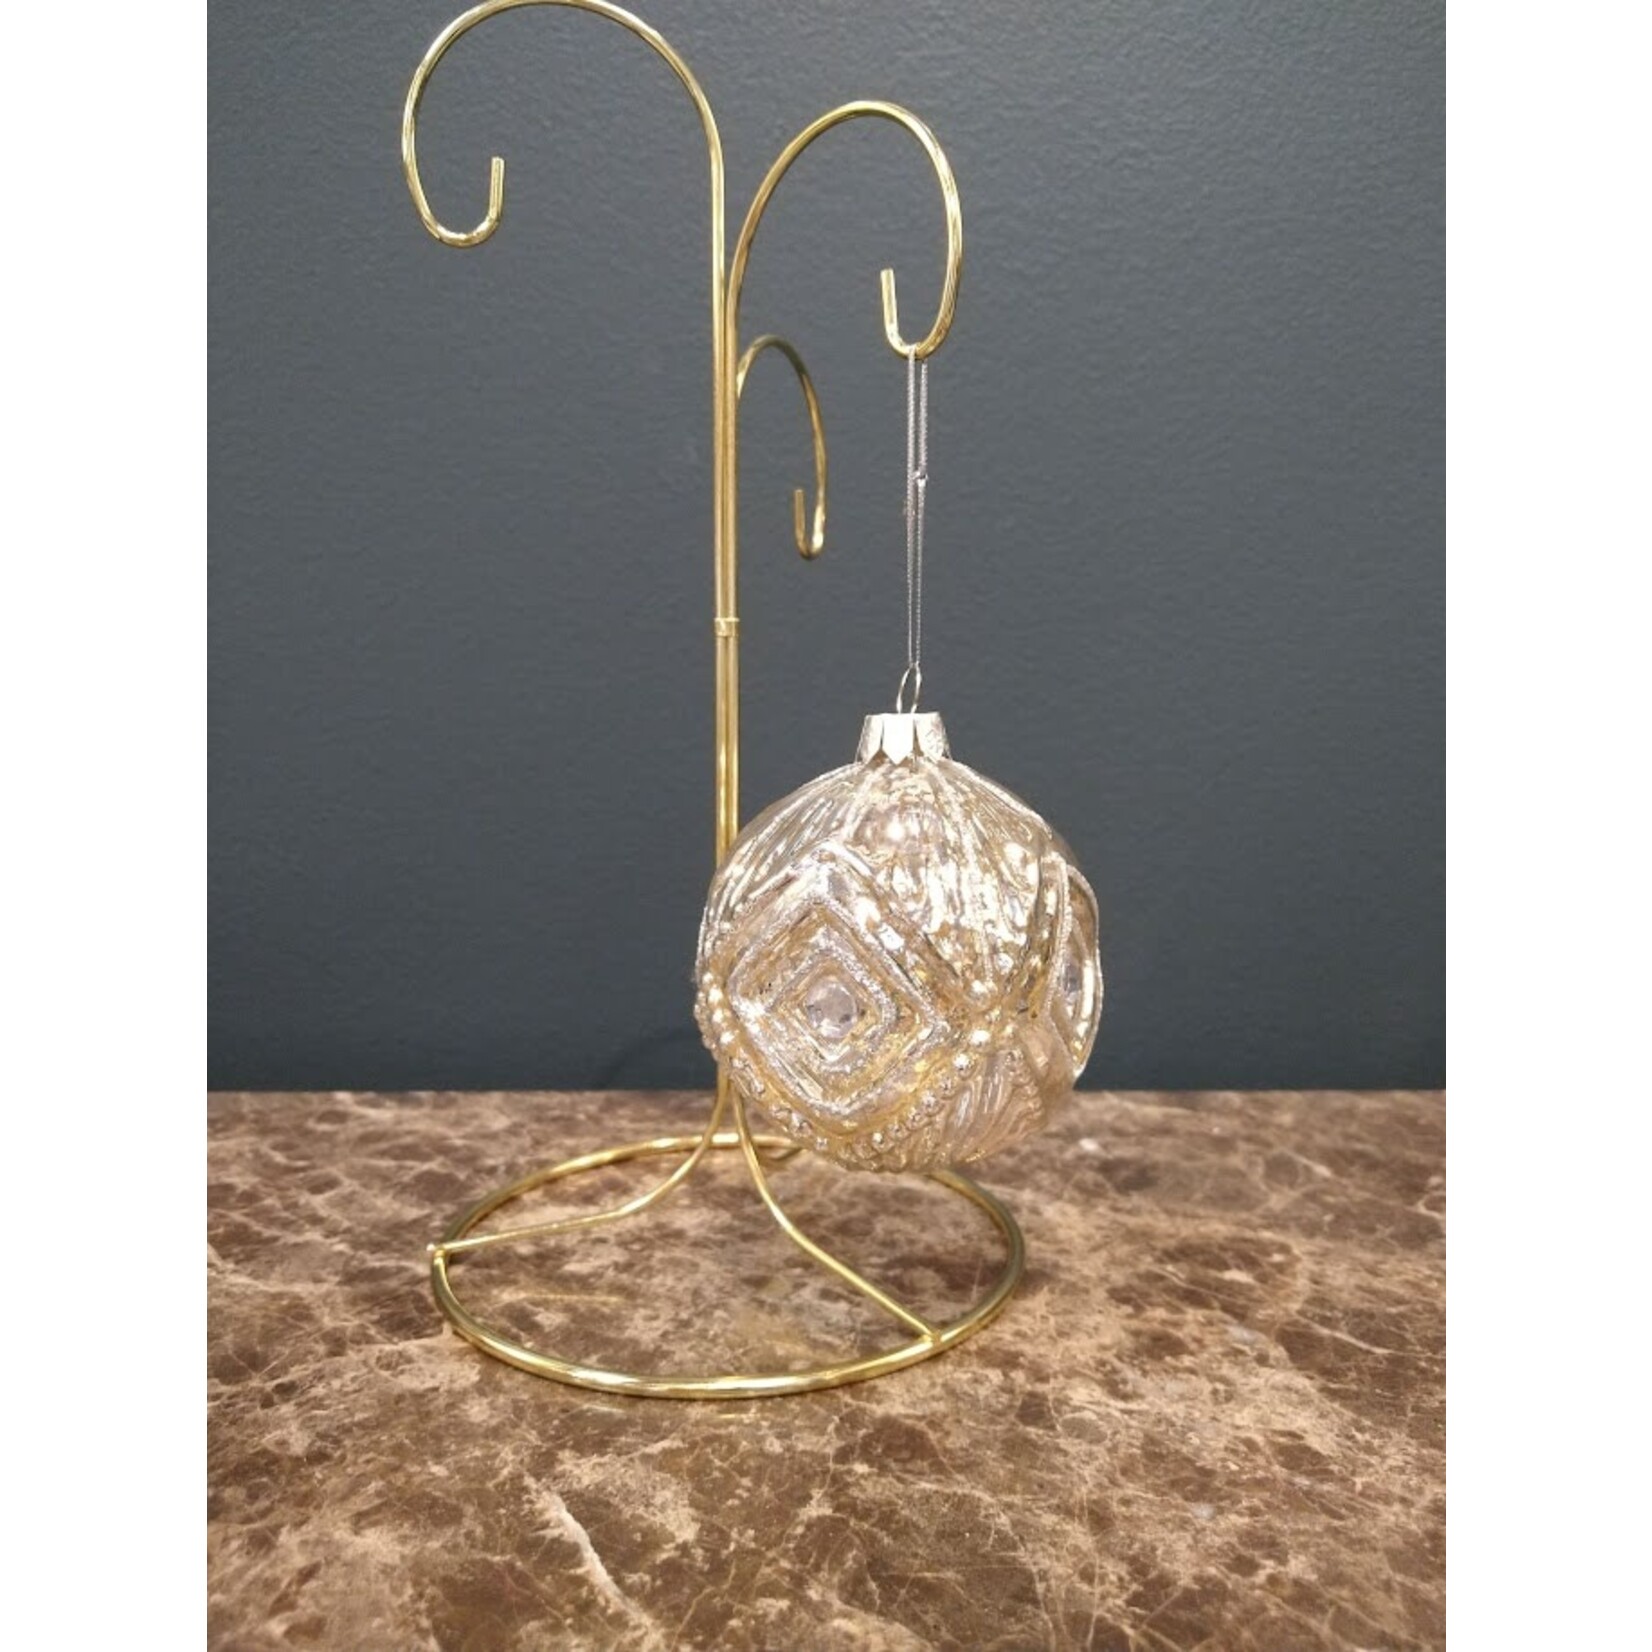 Two's Company Metallic Glass Ornament K